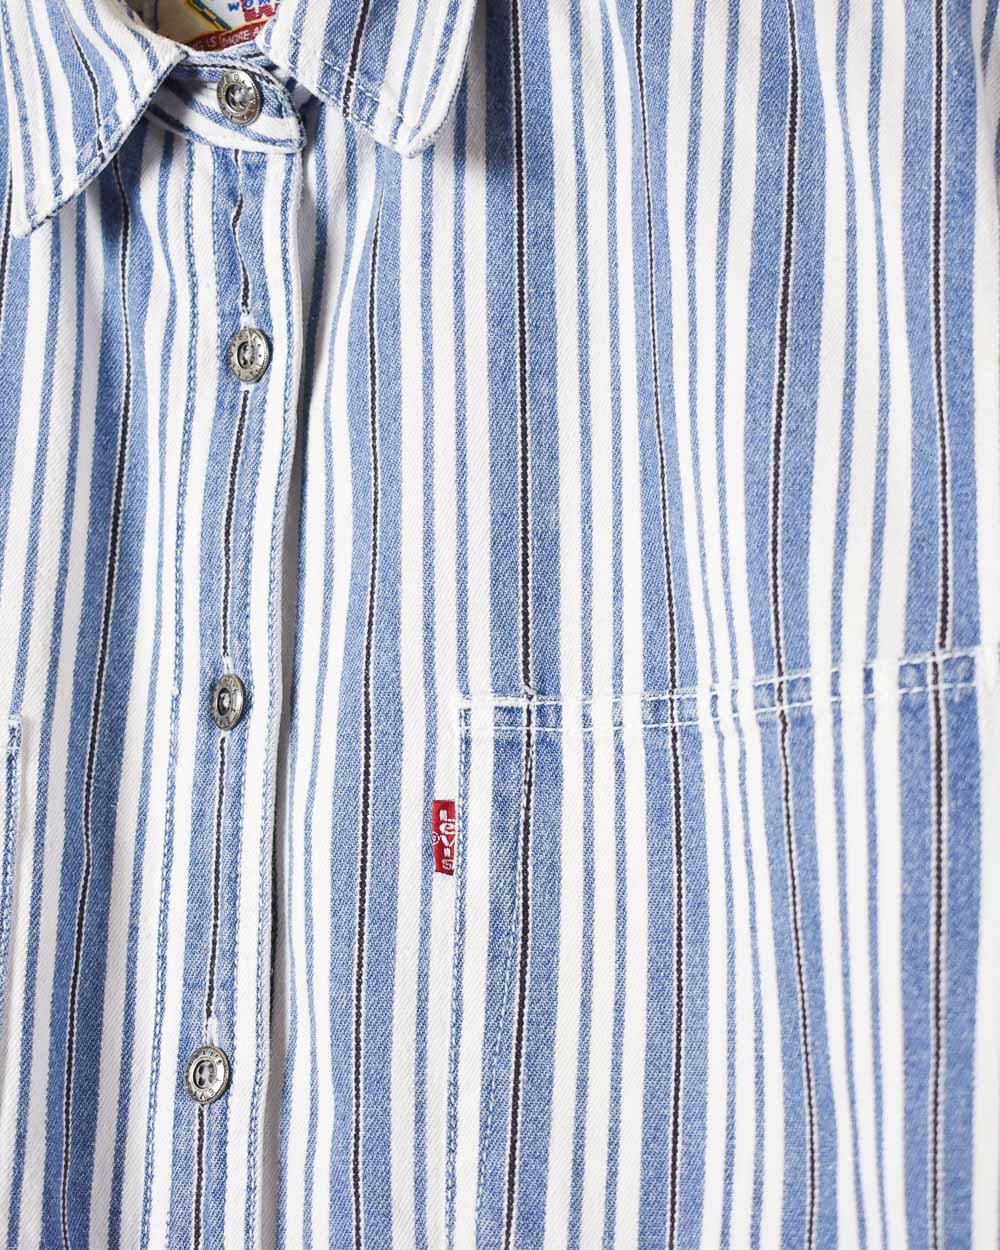 Blue Levi's Striped Shirt - Small Women's